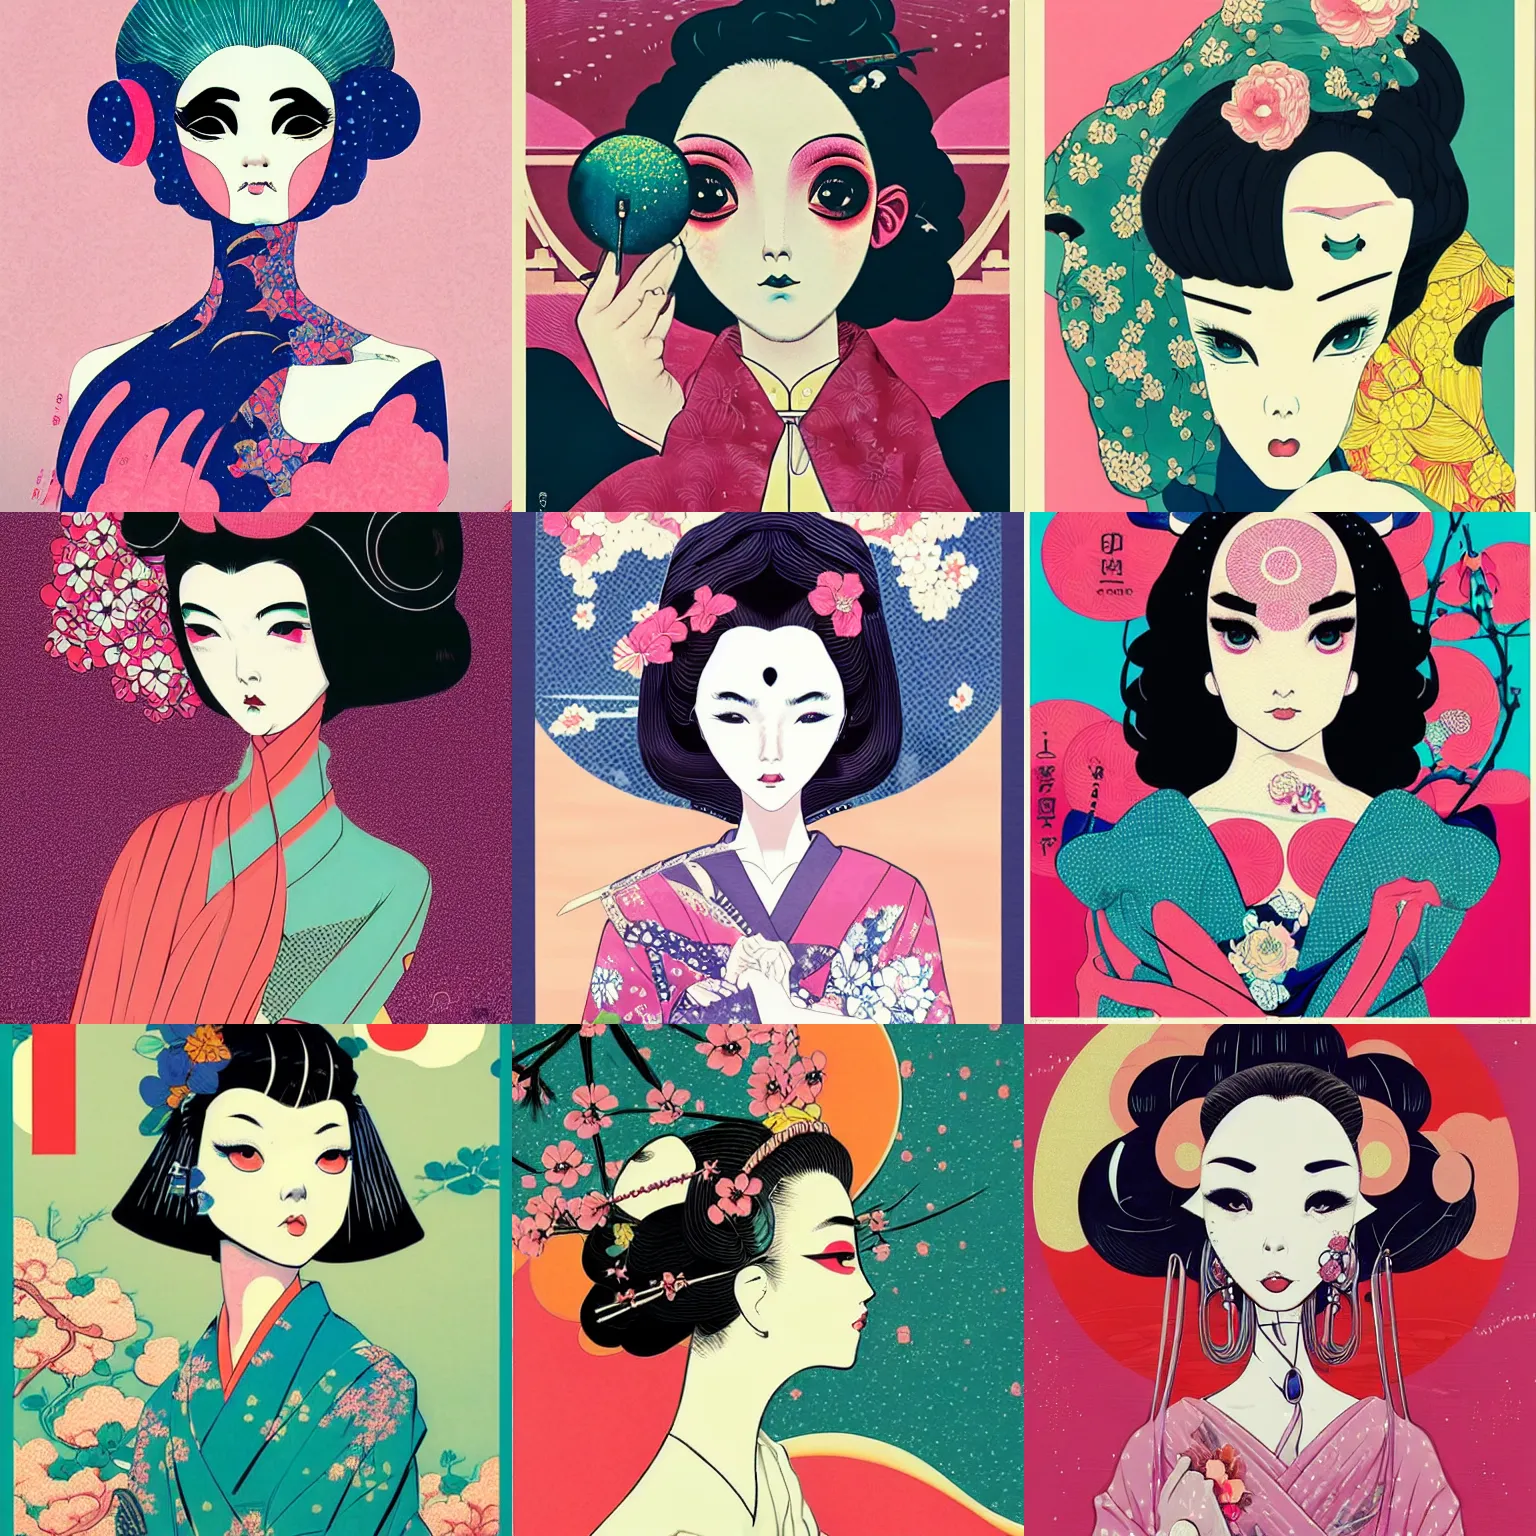 Prompt: beautiful vogue geisha by hokusai, hikari shimoda, victo ngai, classic shoujo, in the style of 6 0 s pop art, fantastic planet, minimalist poster art, pastel colors, gothic, retrofuturism, icon, skull, artstation, artgerm